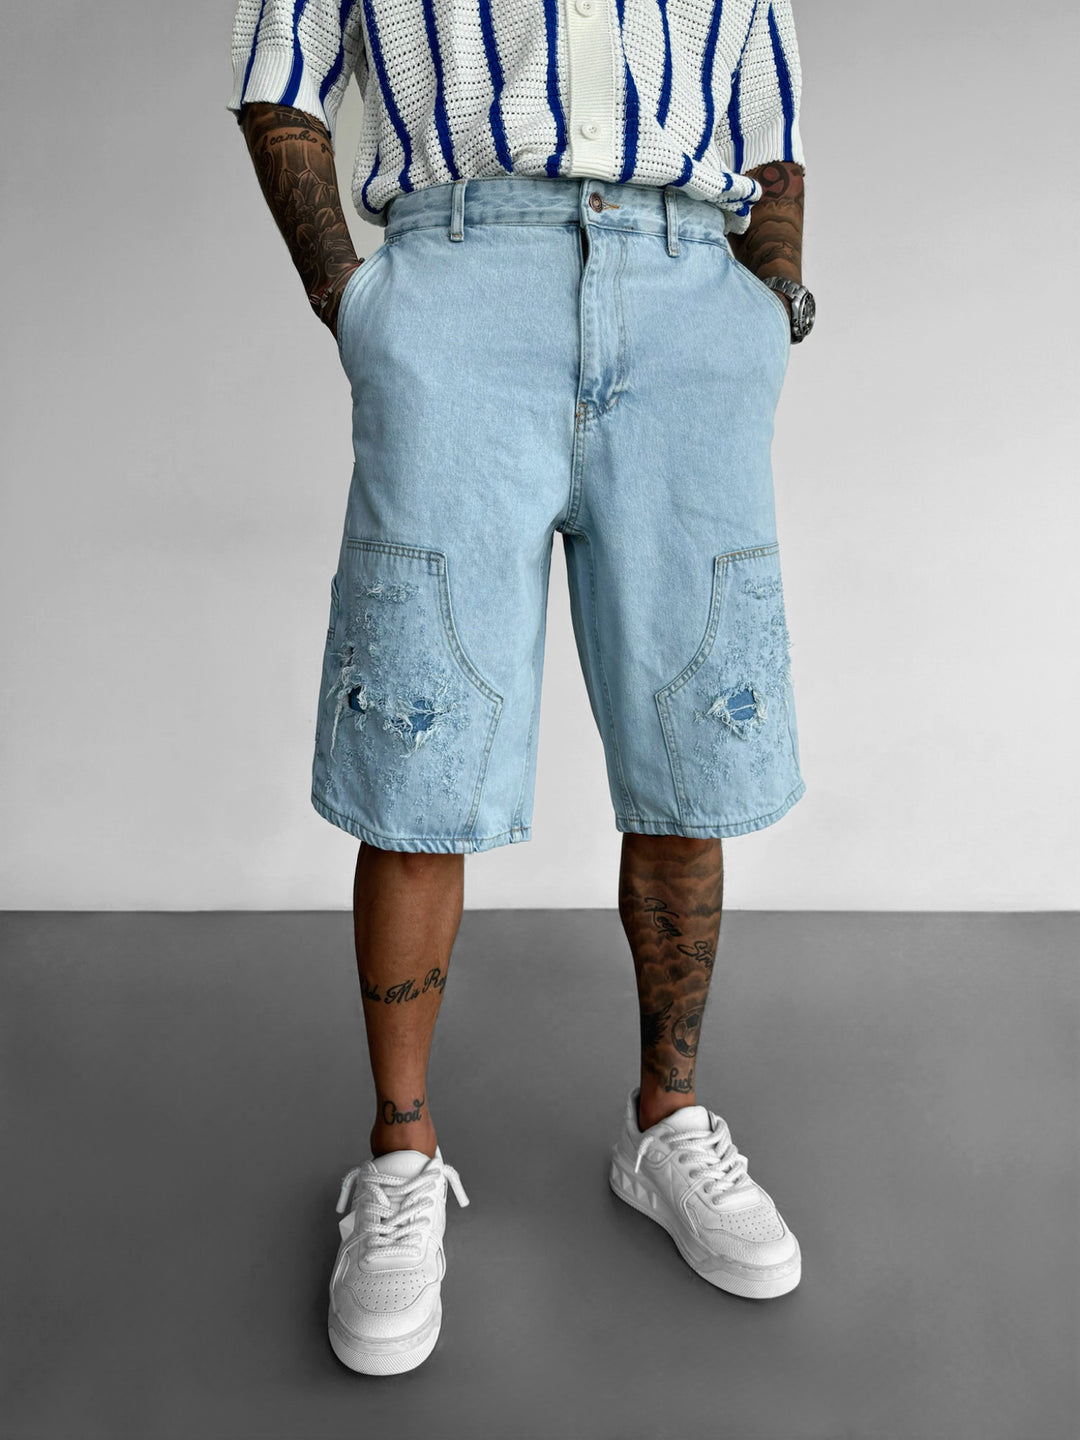 Loose Fit Detail Torn Jeans Shorts - Light Blue